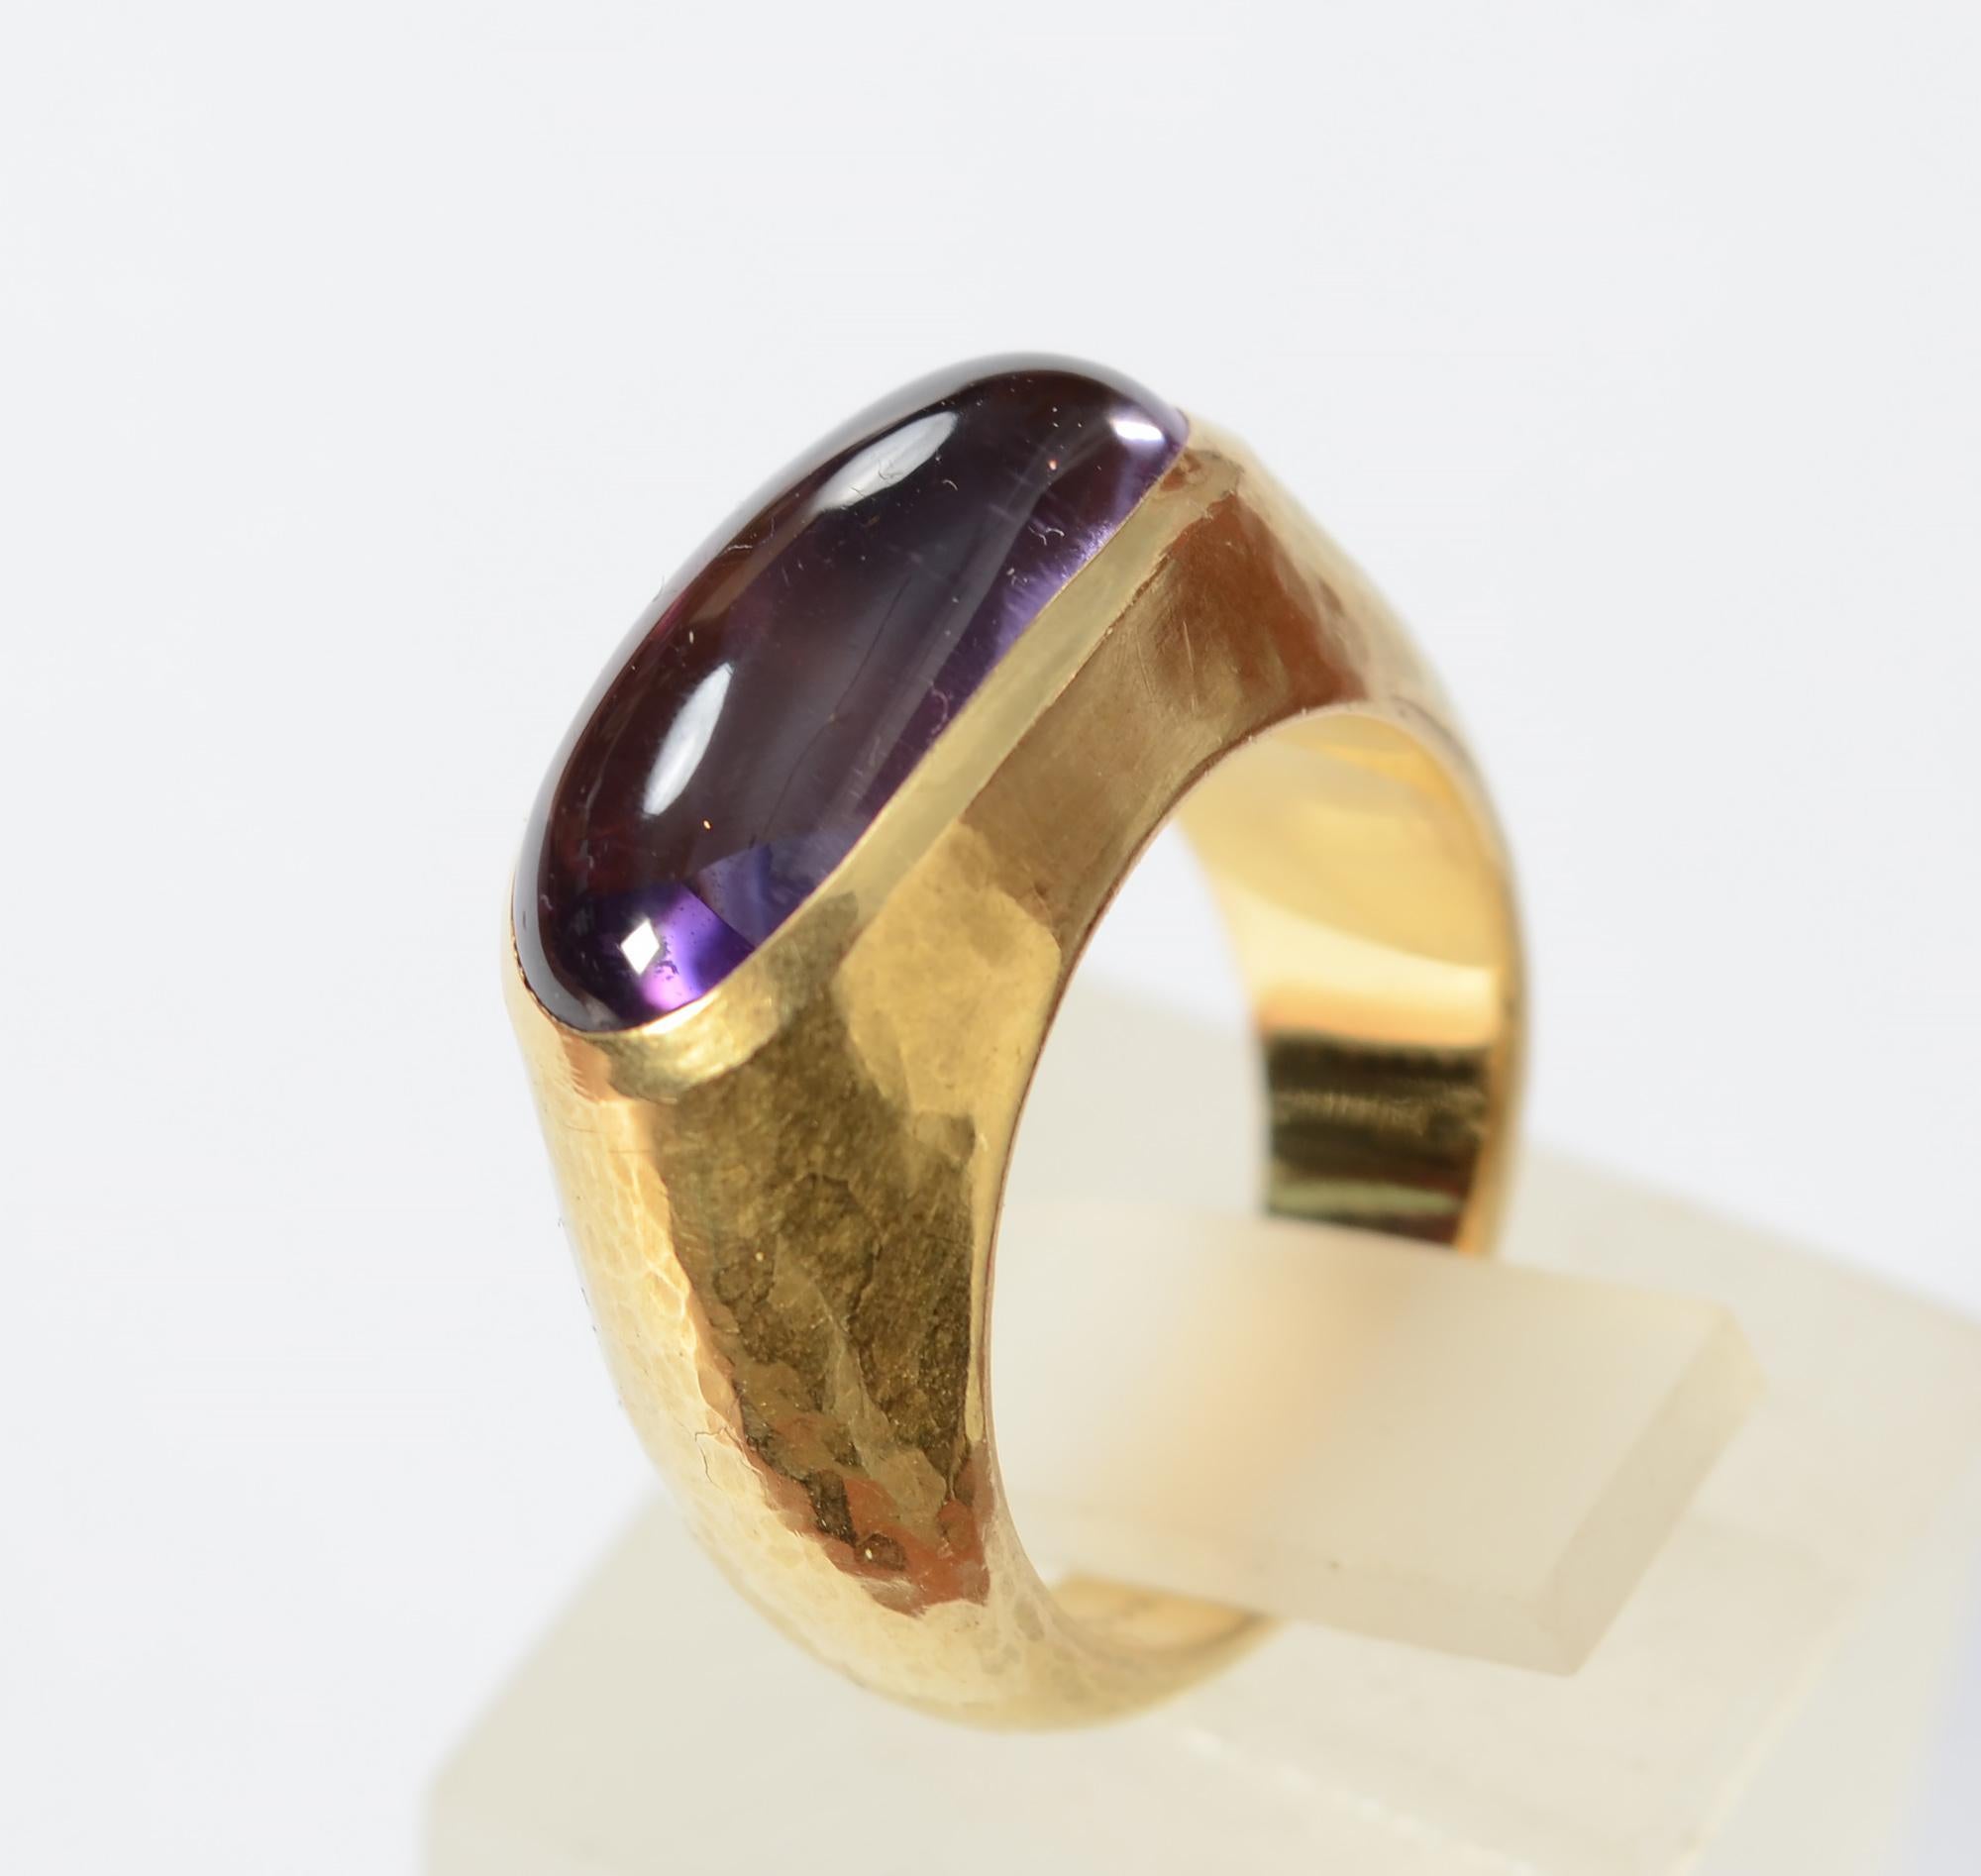 Lovely amethyst ring by London designer, Leo De Vroomen. The 18 karat gold has a lightly hand hammered finish. The amethyst measures 3/4